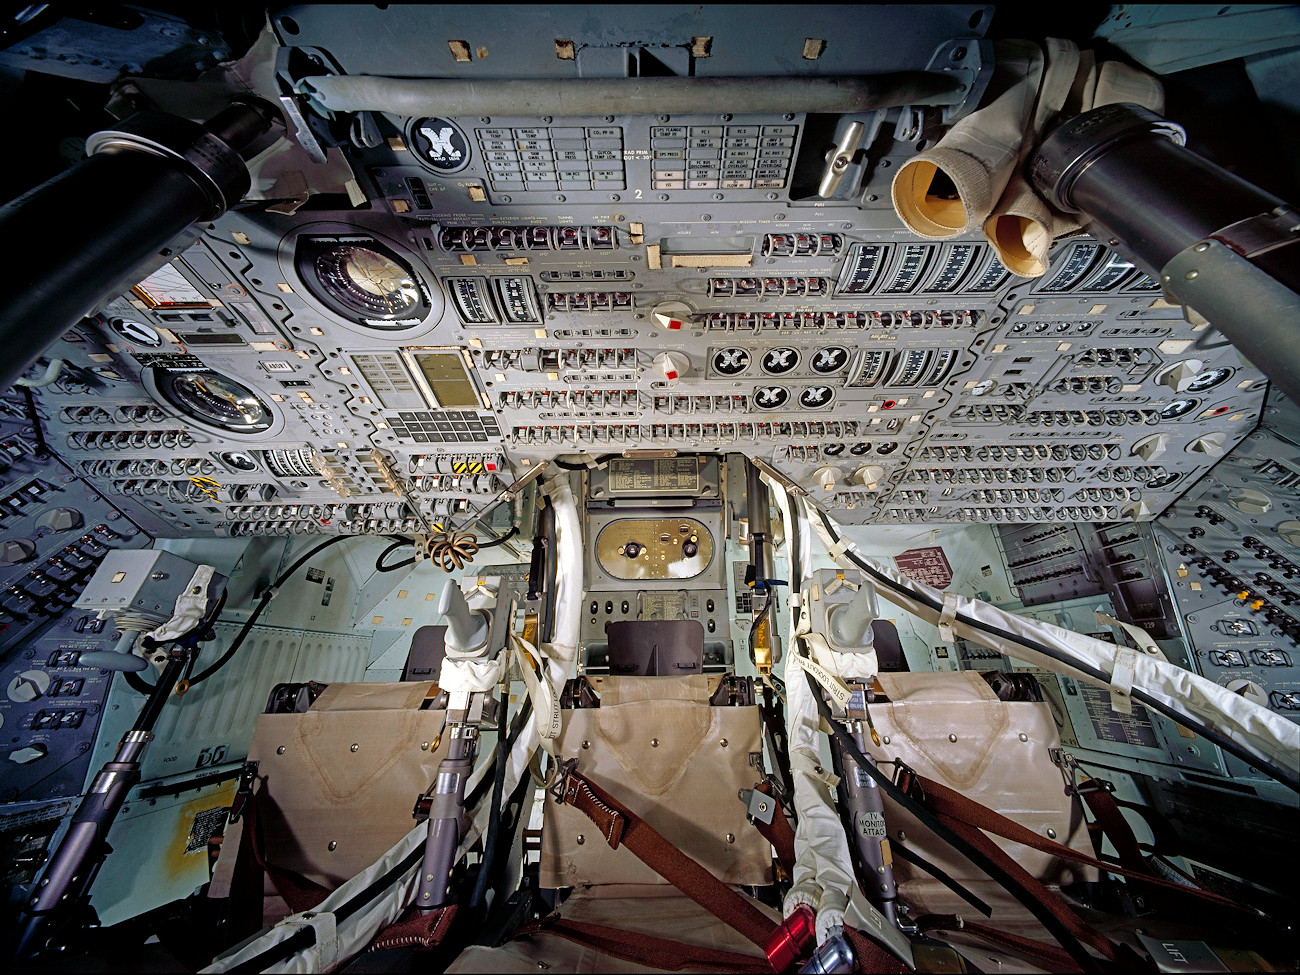 Raumkapsel Columbia - Cockpit der Apollo 11 Mondmission